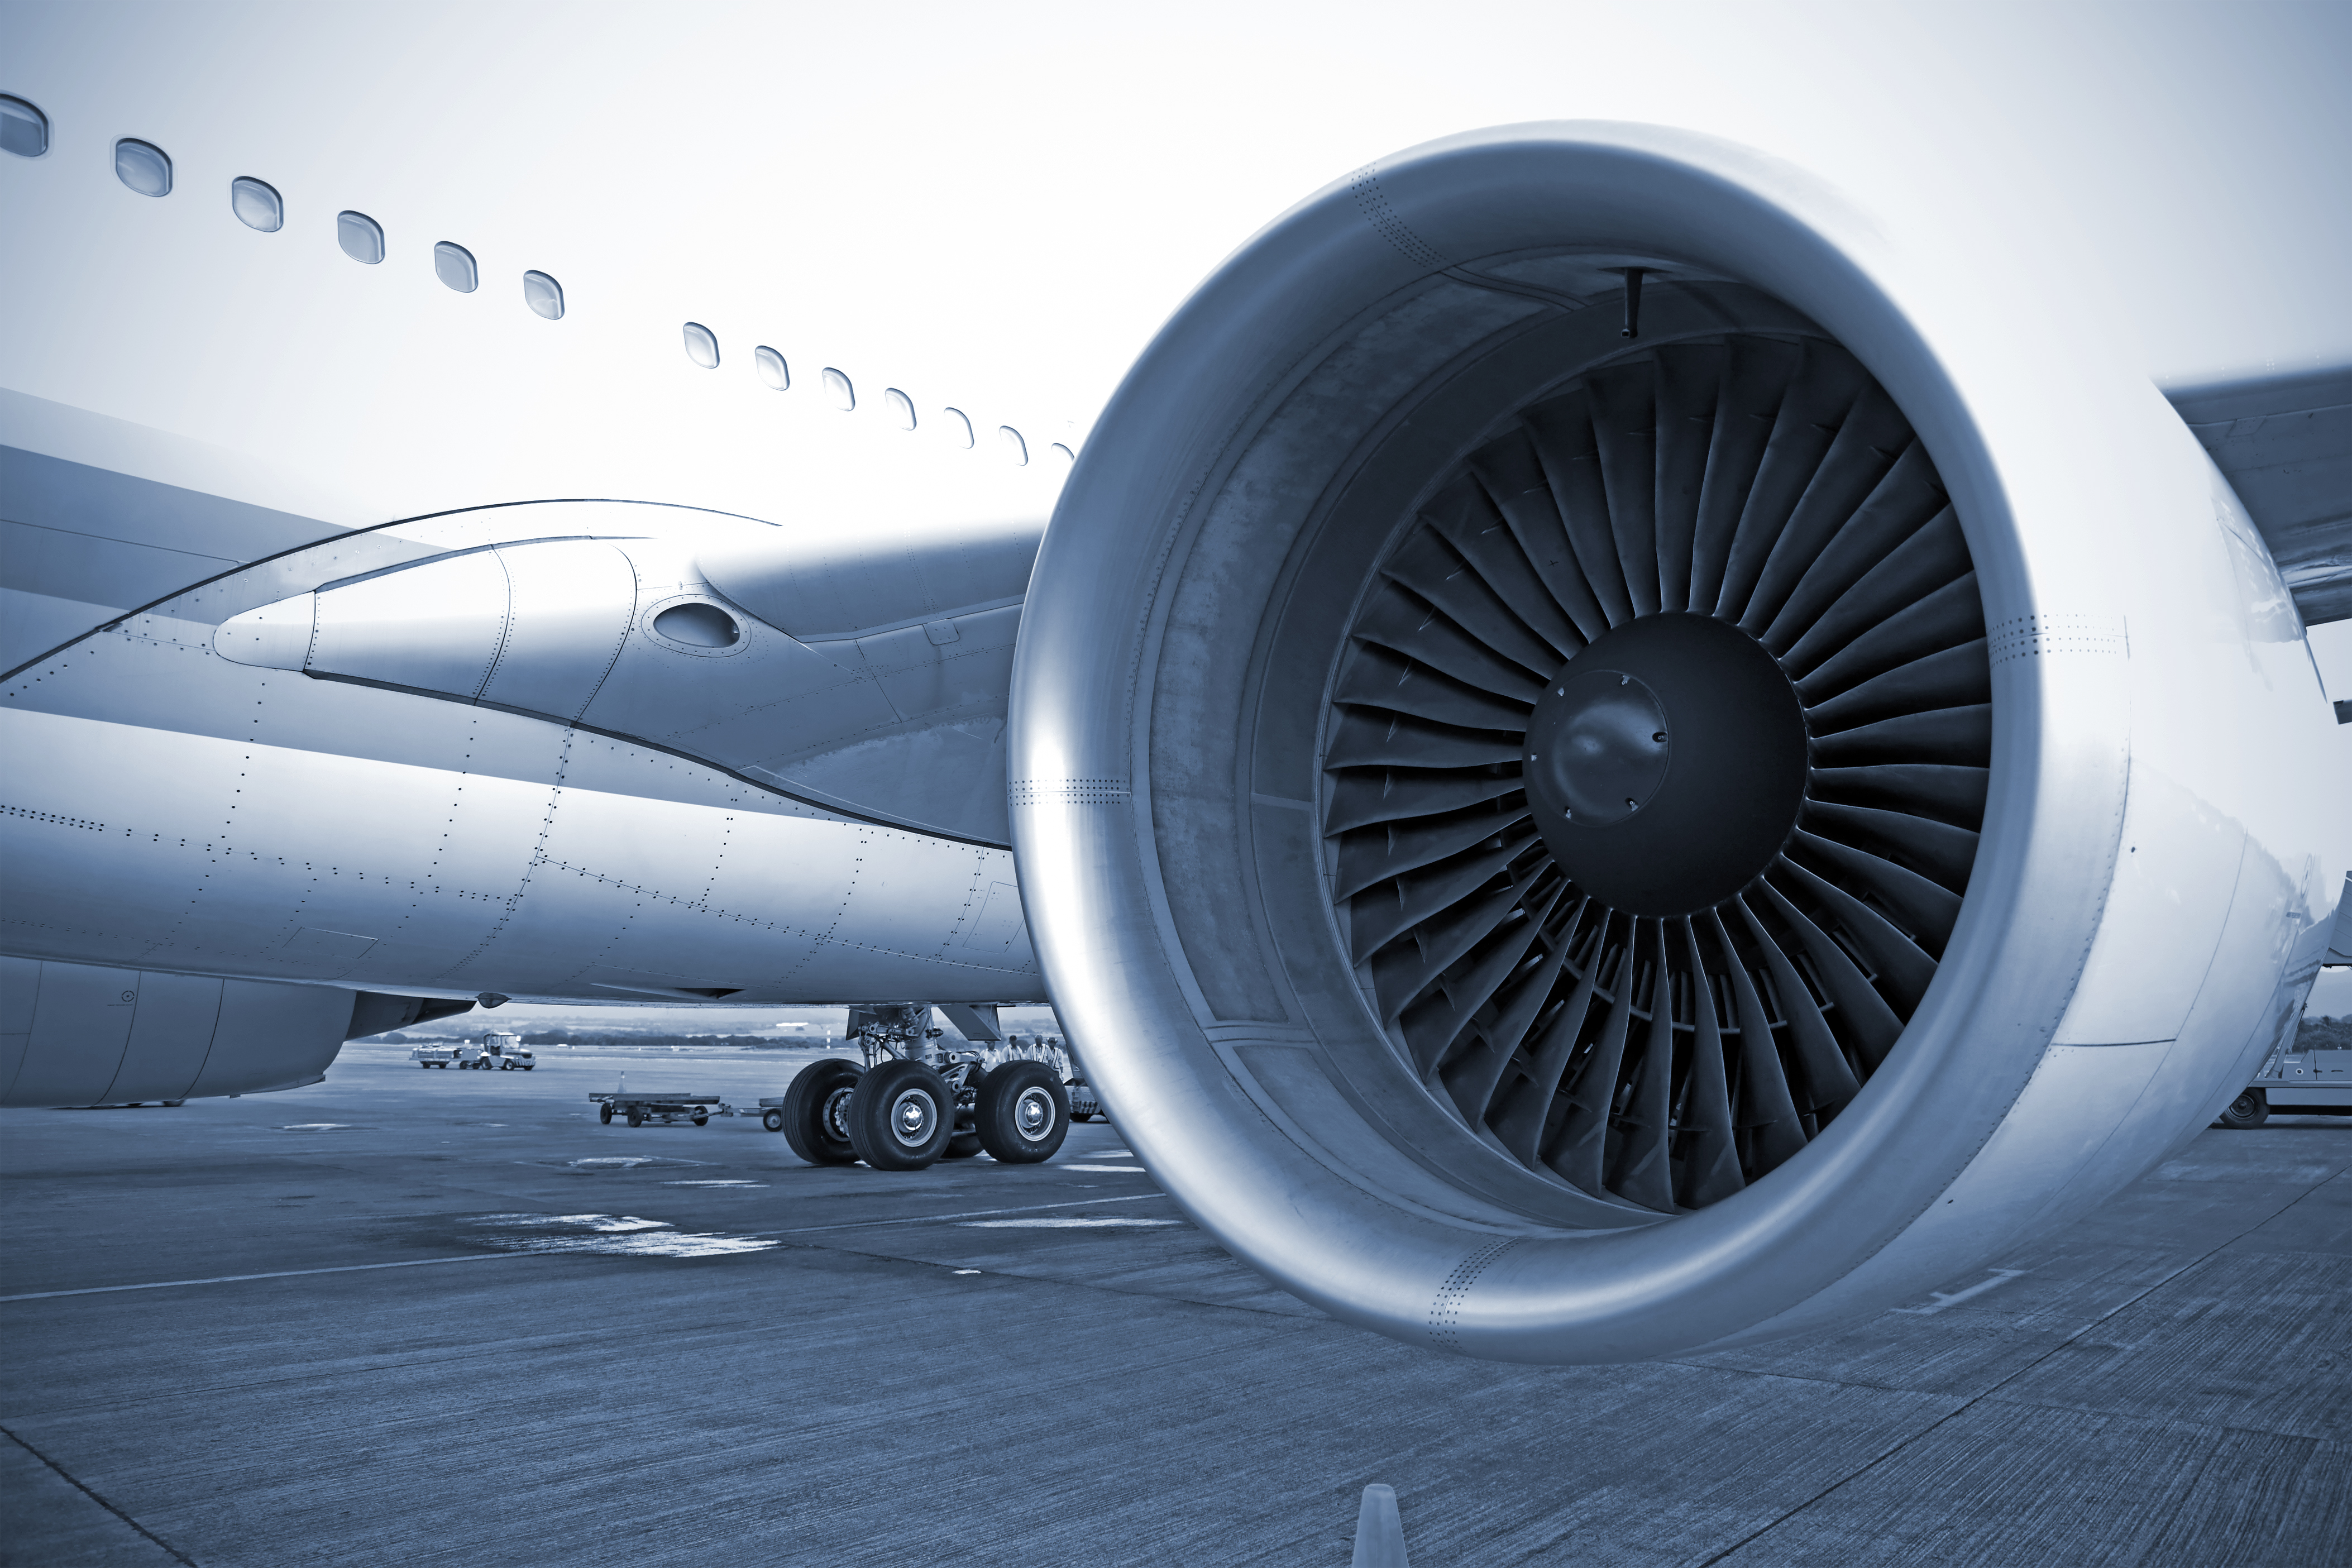 Aeroplane engine in airport